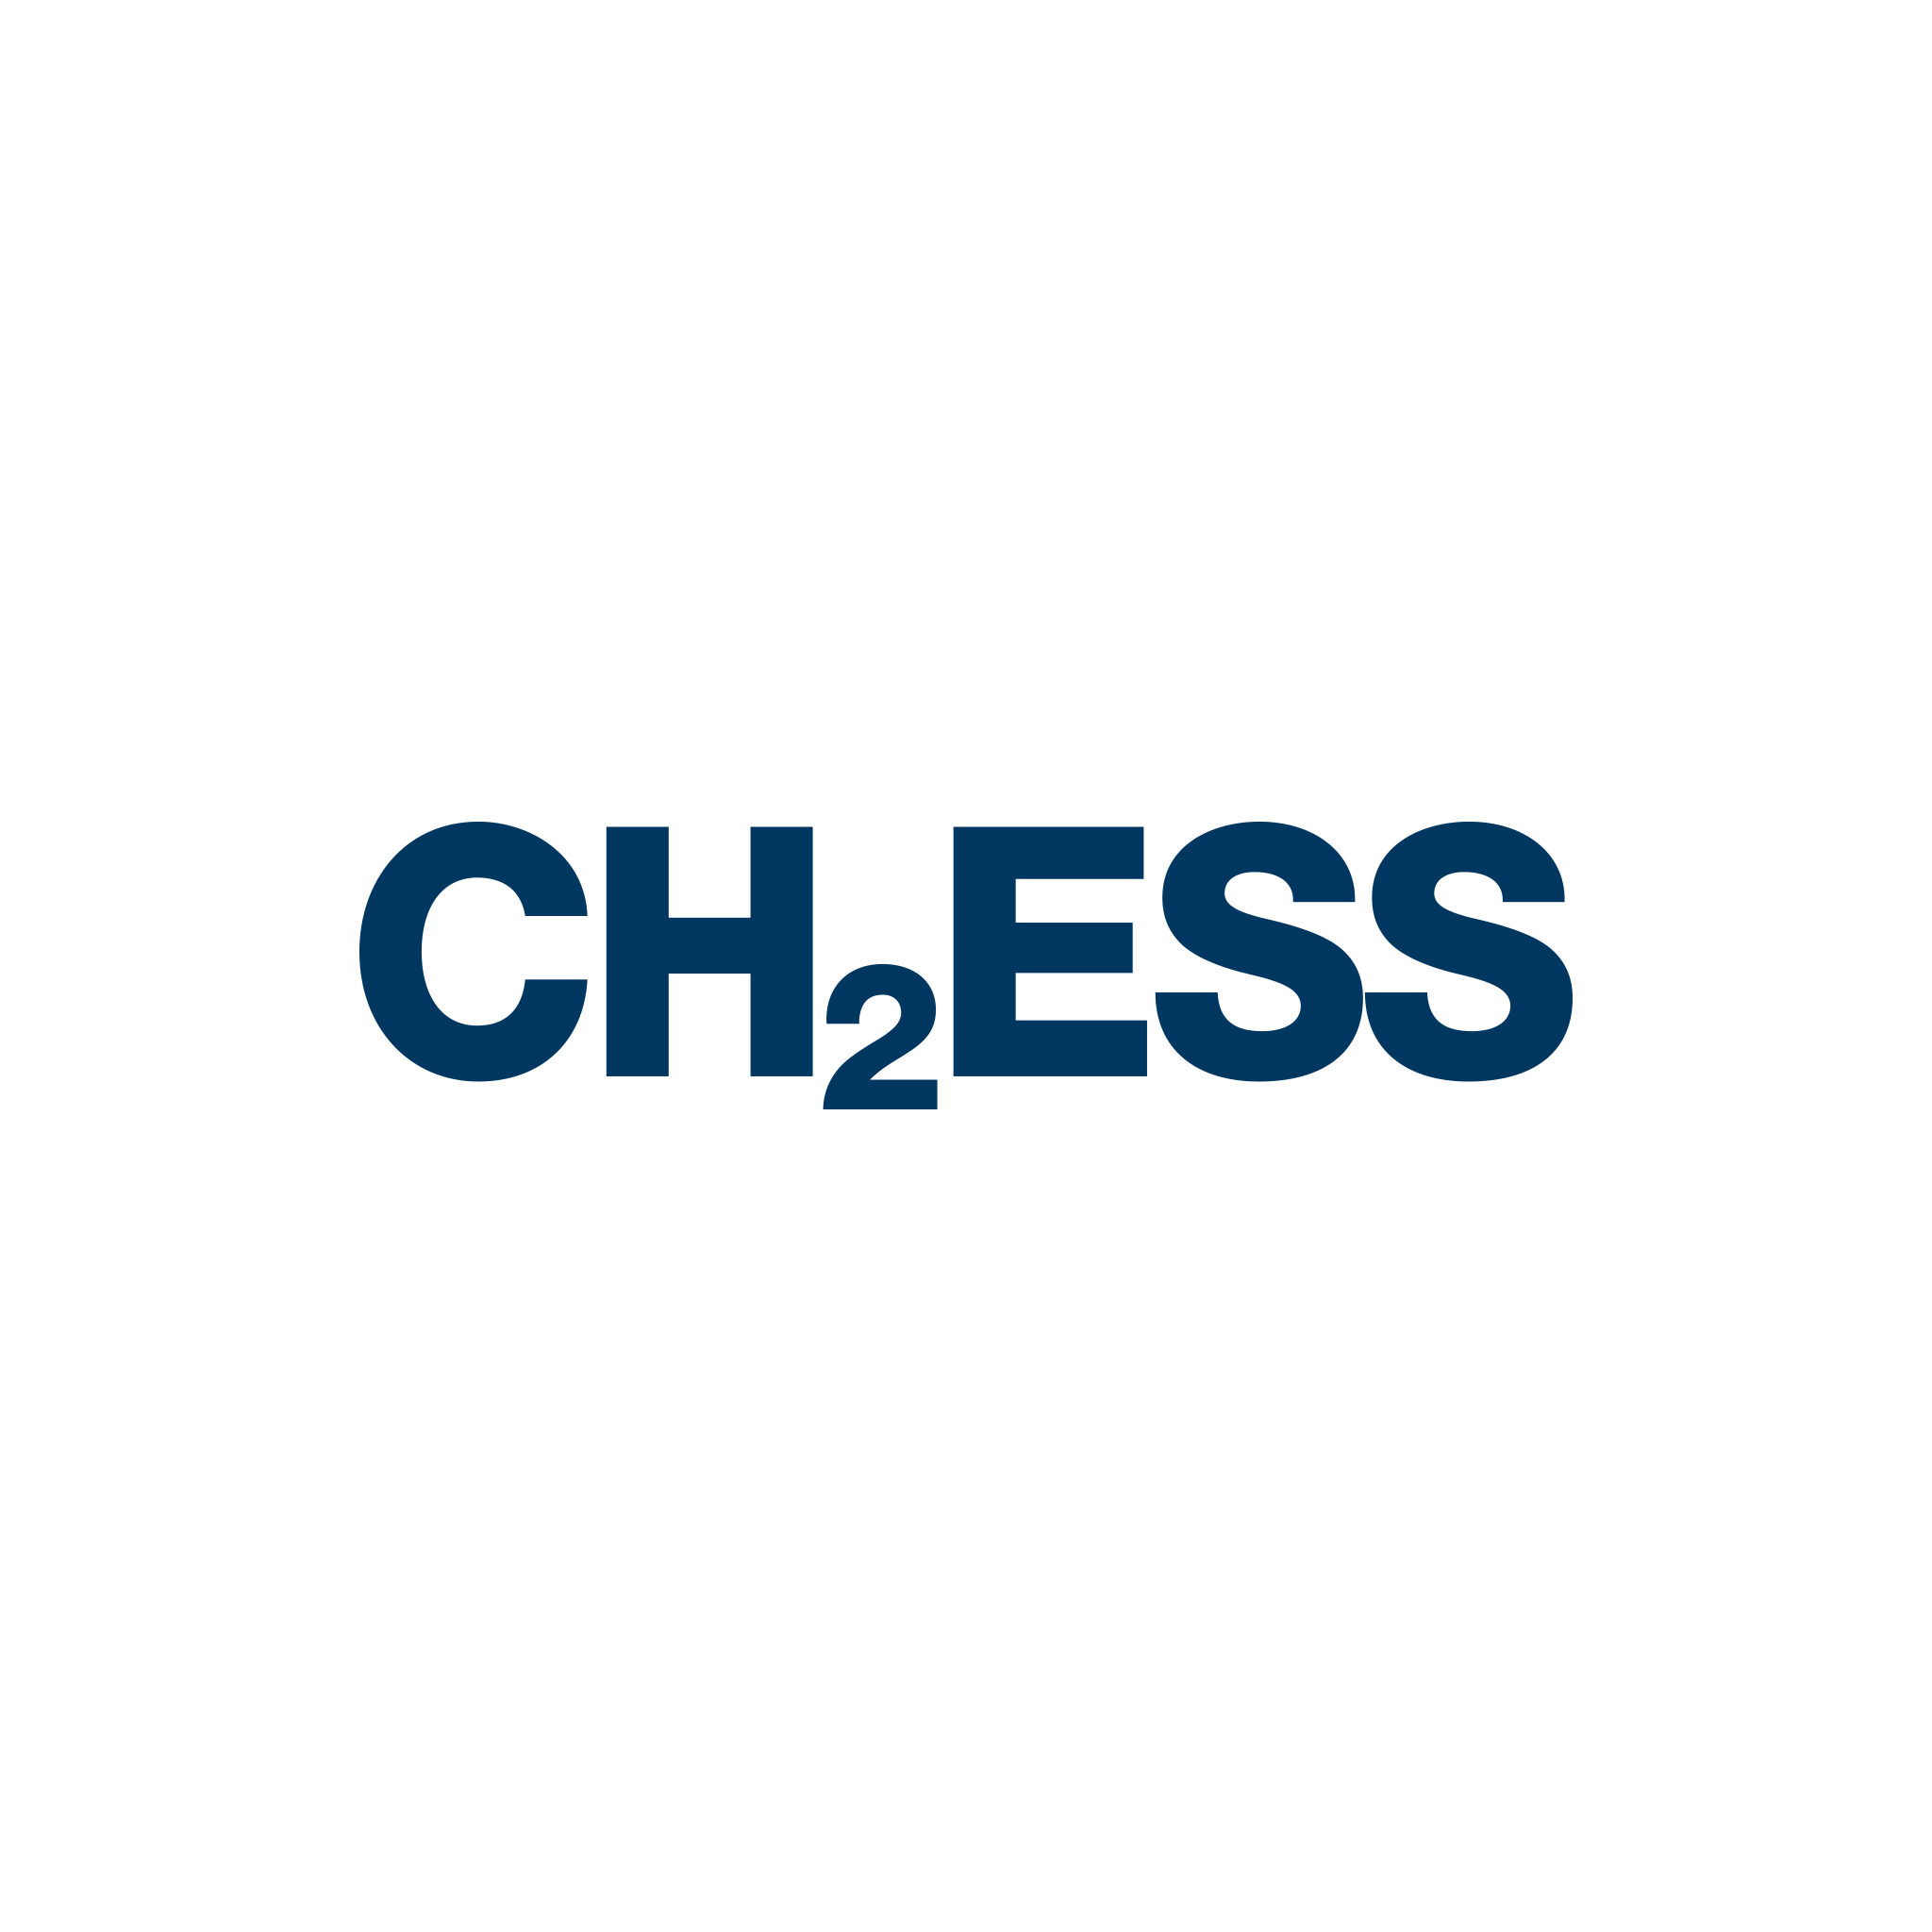 CH2ESS logo in navy blue